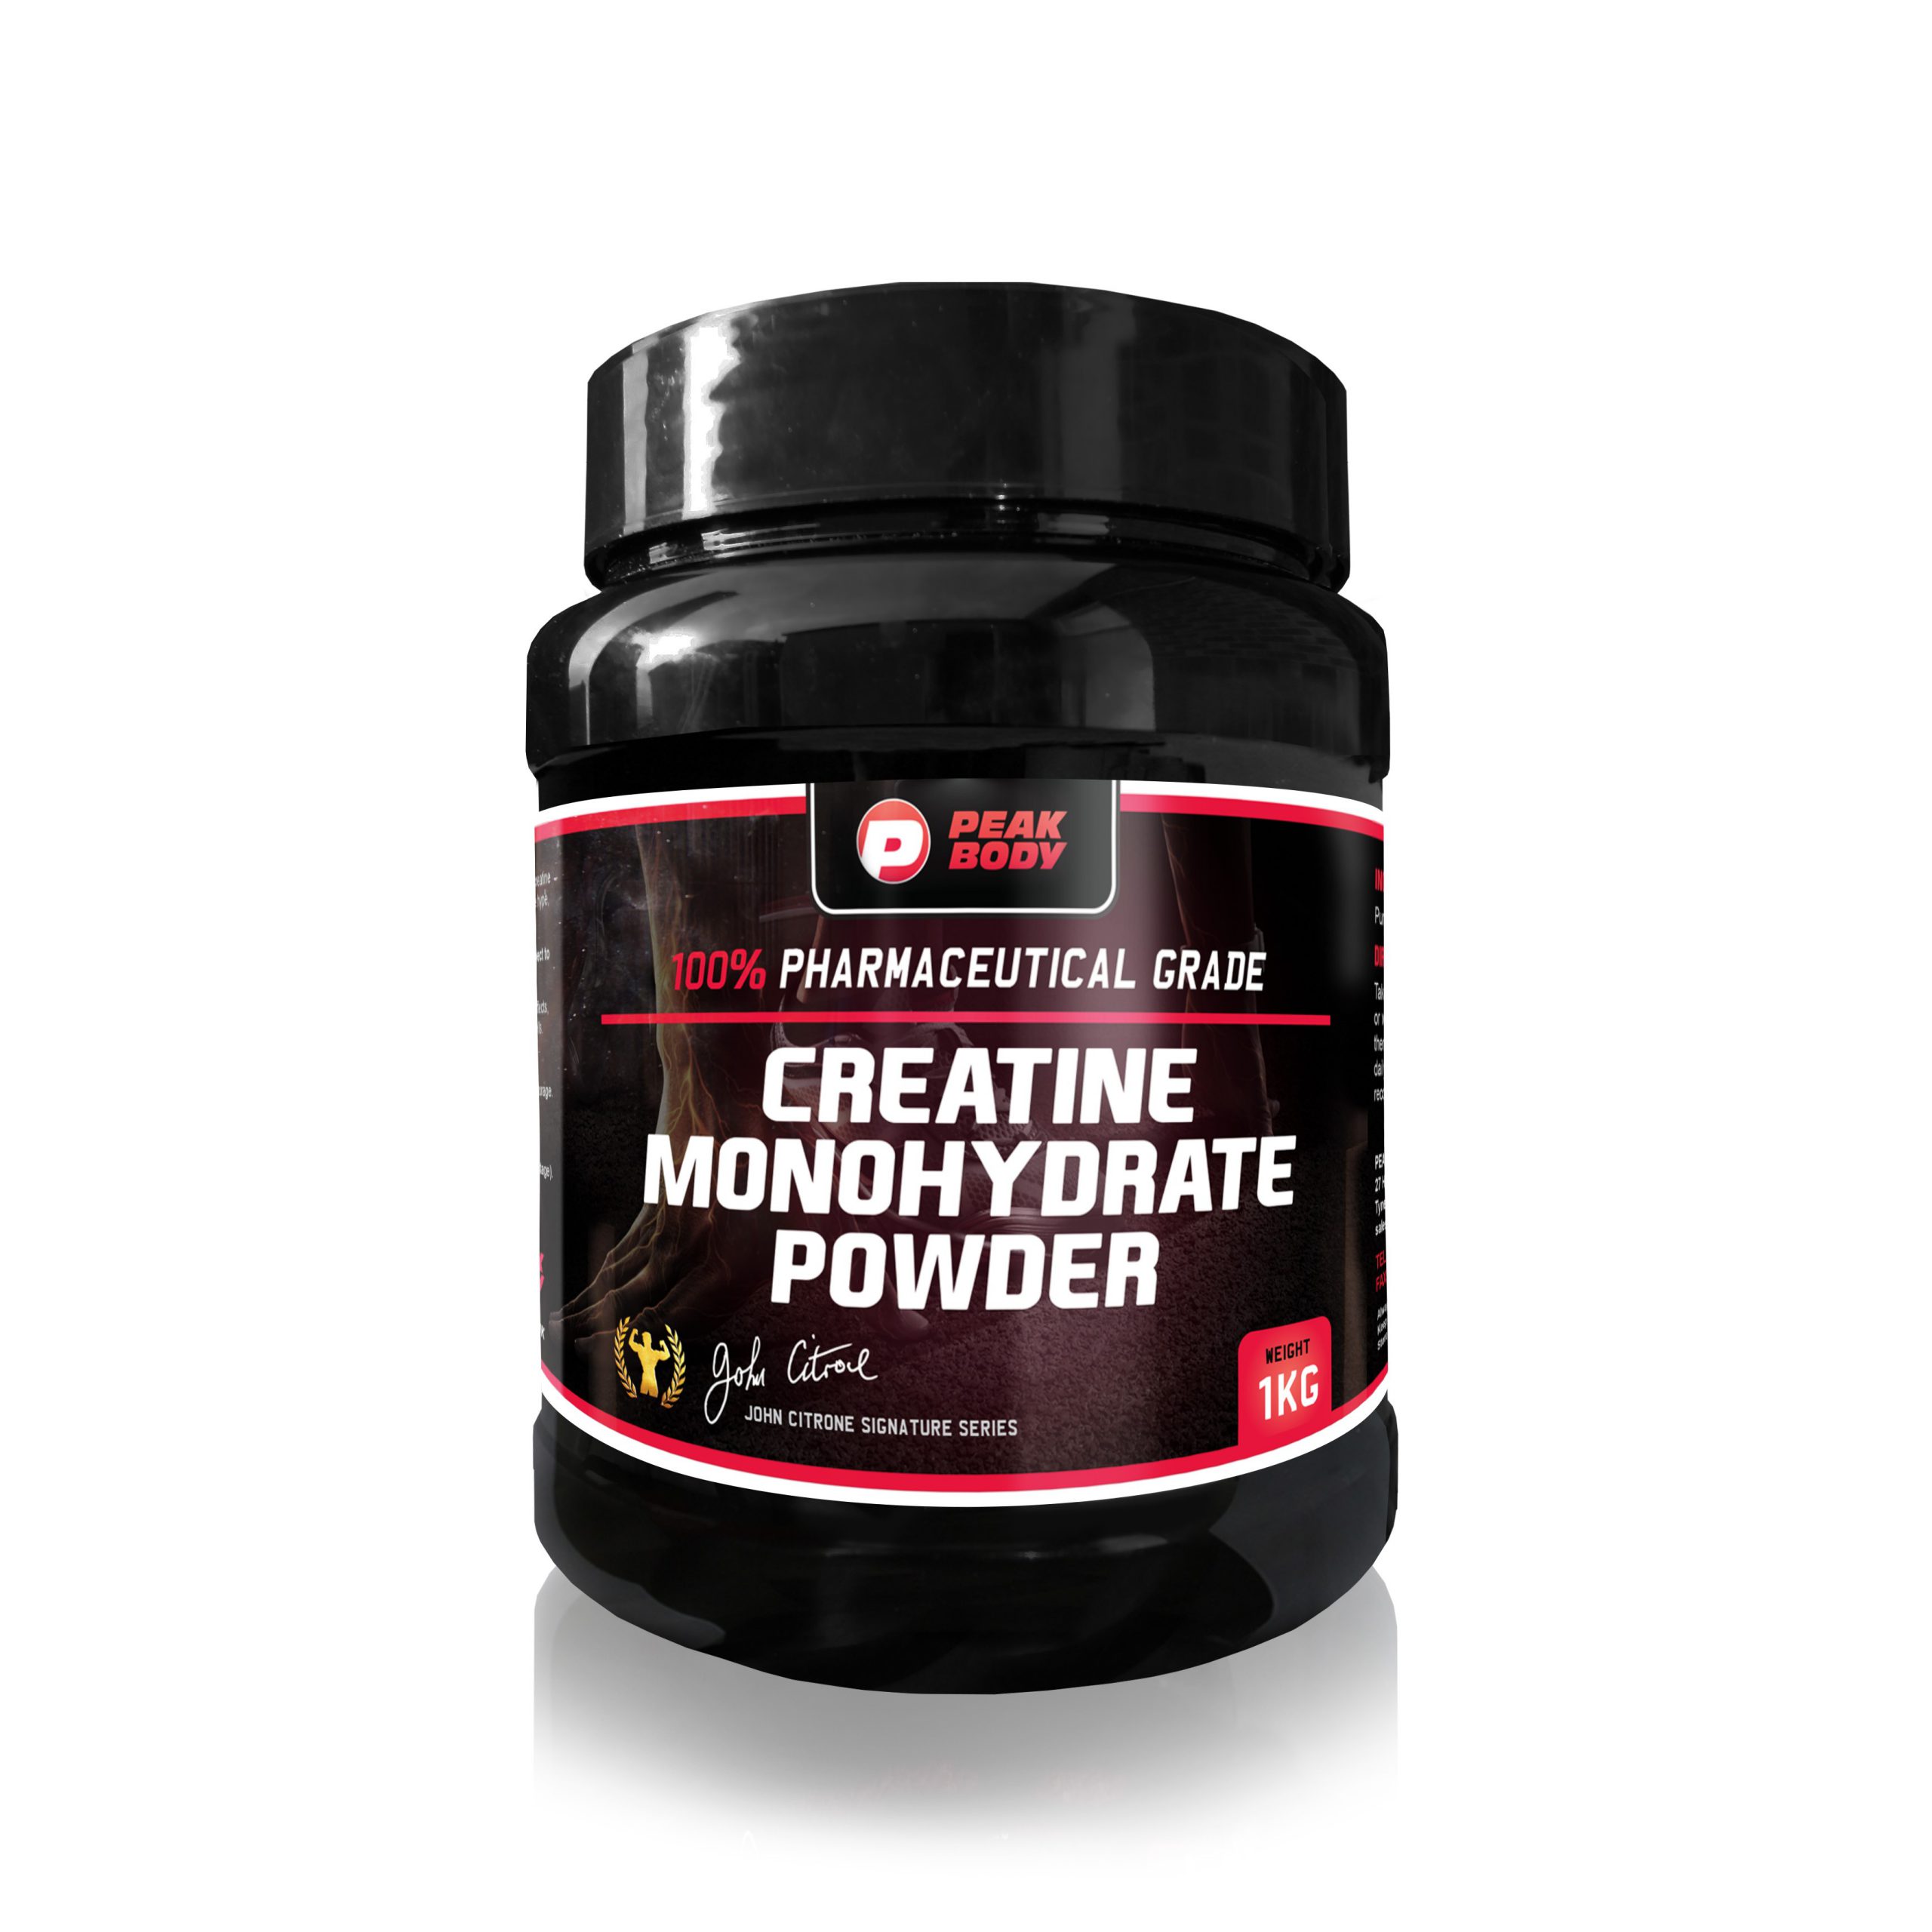 Peak Body Creatine Monohydrate